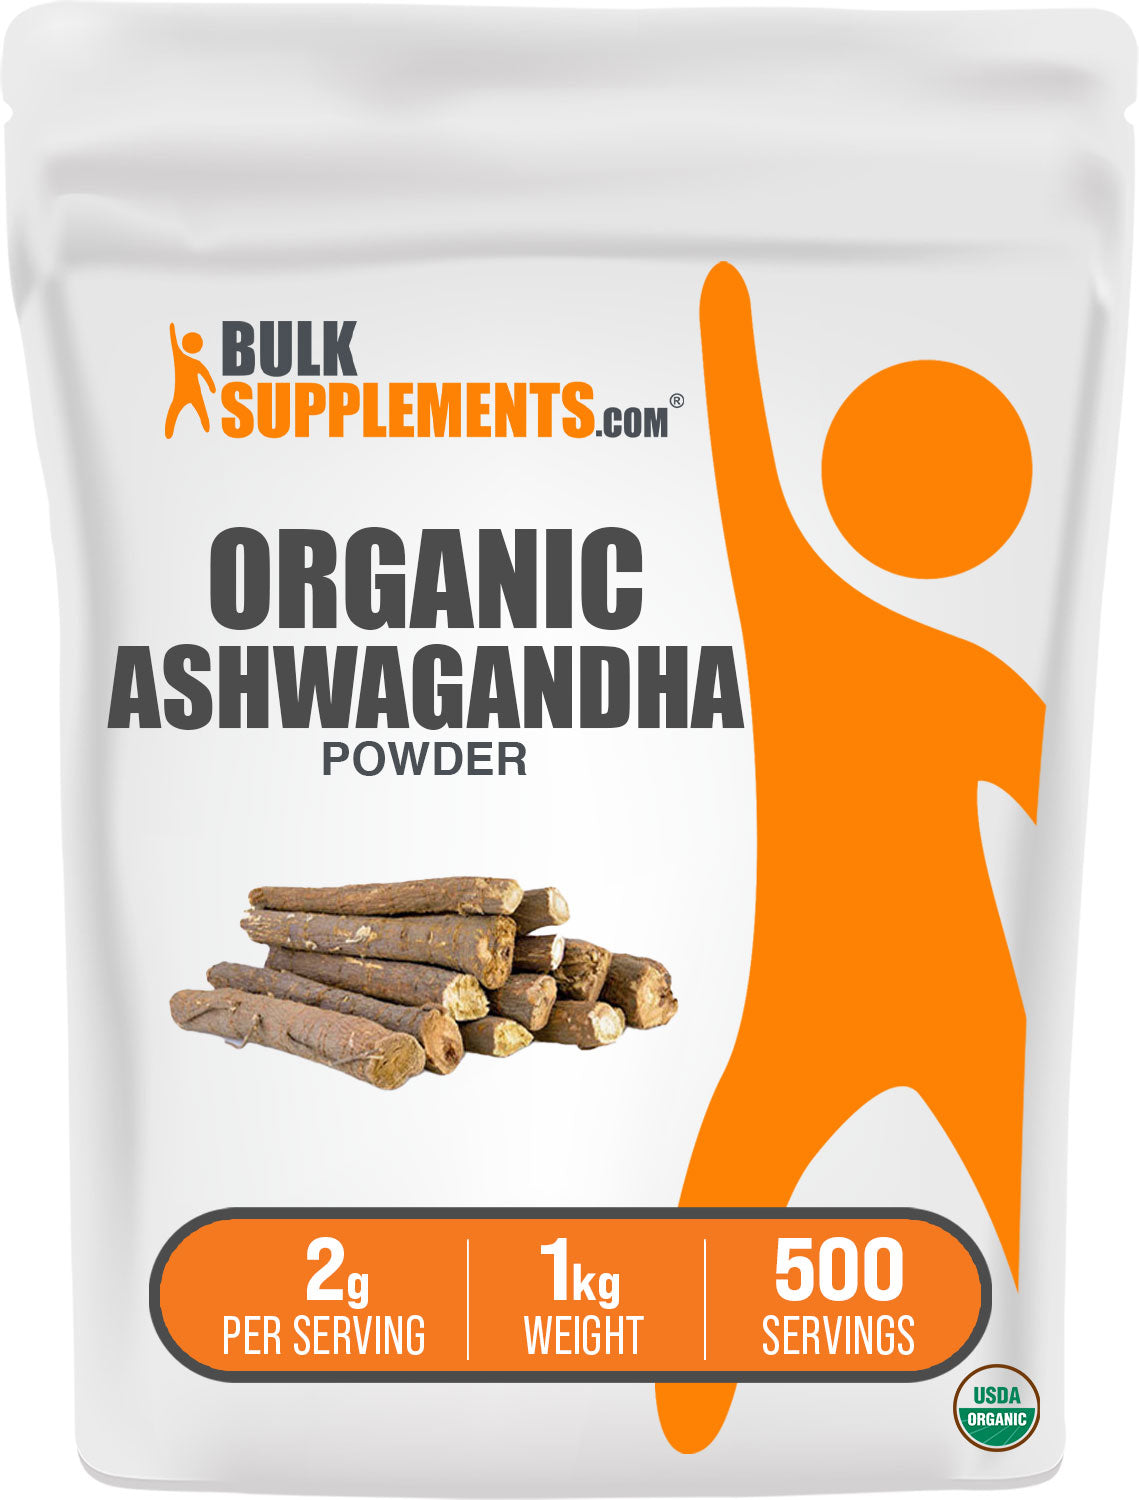 BulkSupplements.com Organic Ashwagandha Powder 1kg Bag